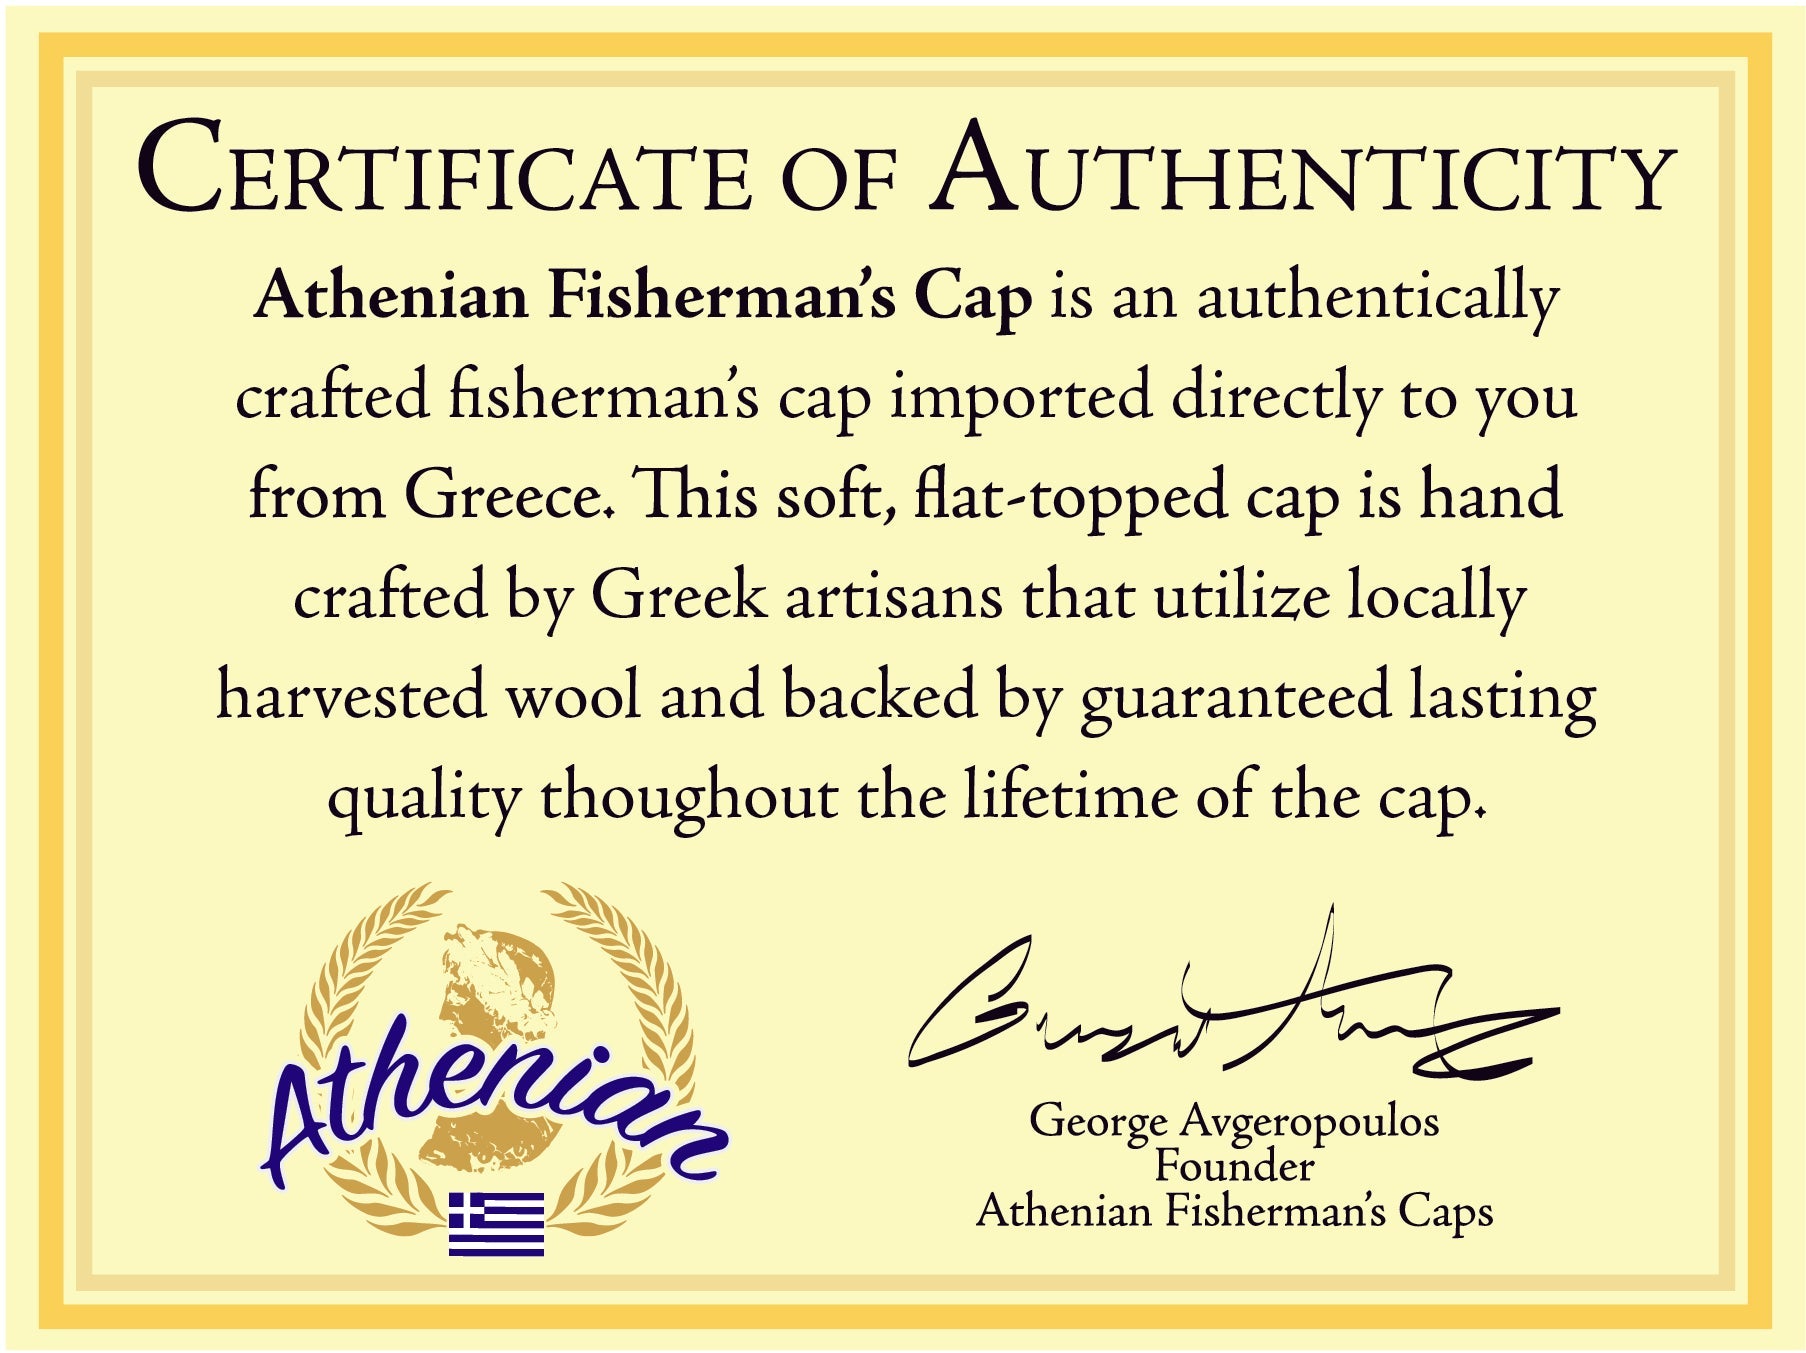 Authentic Greek Fisherman's Cap - Cotton - Khaki